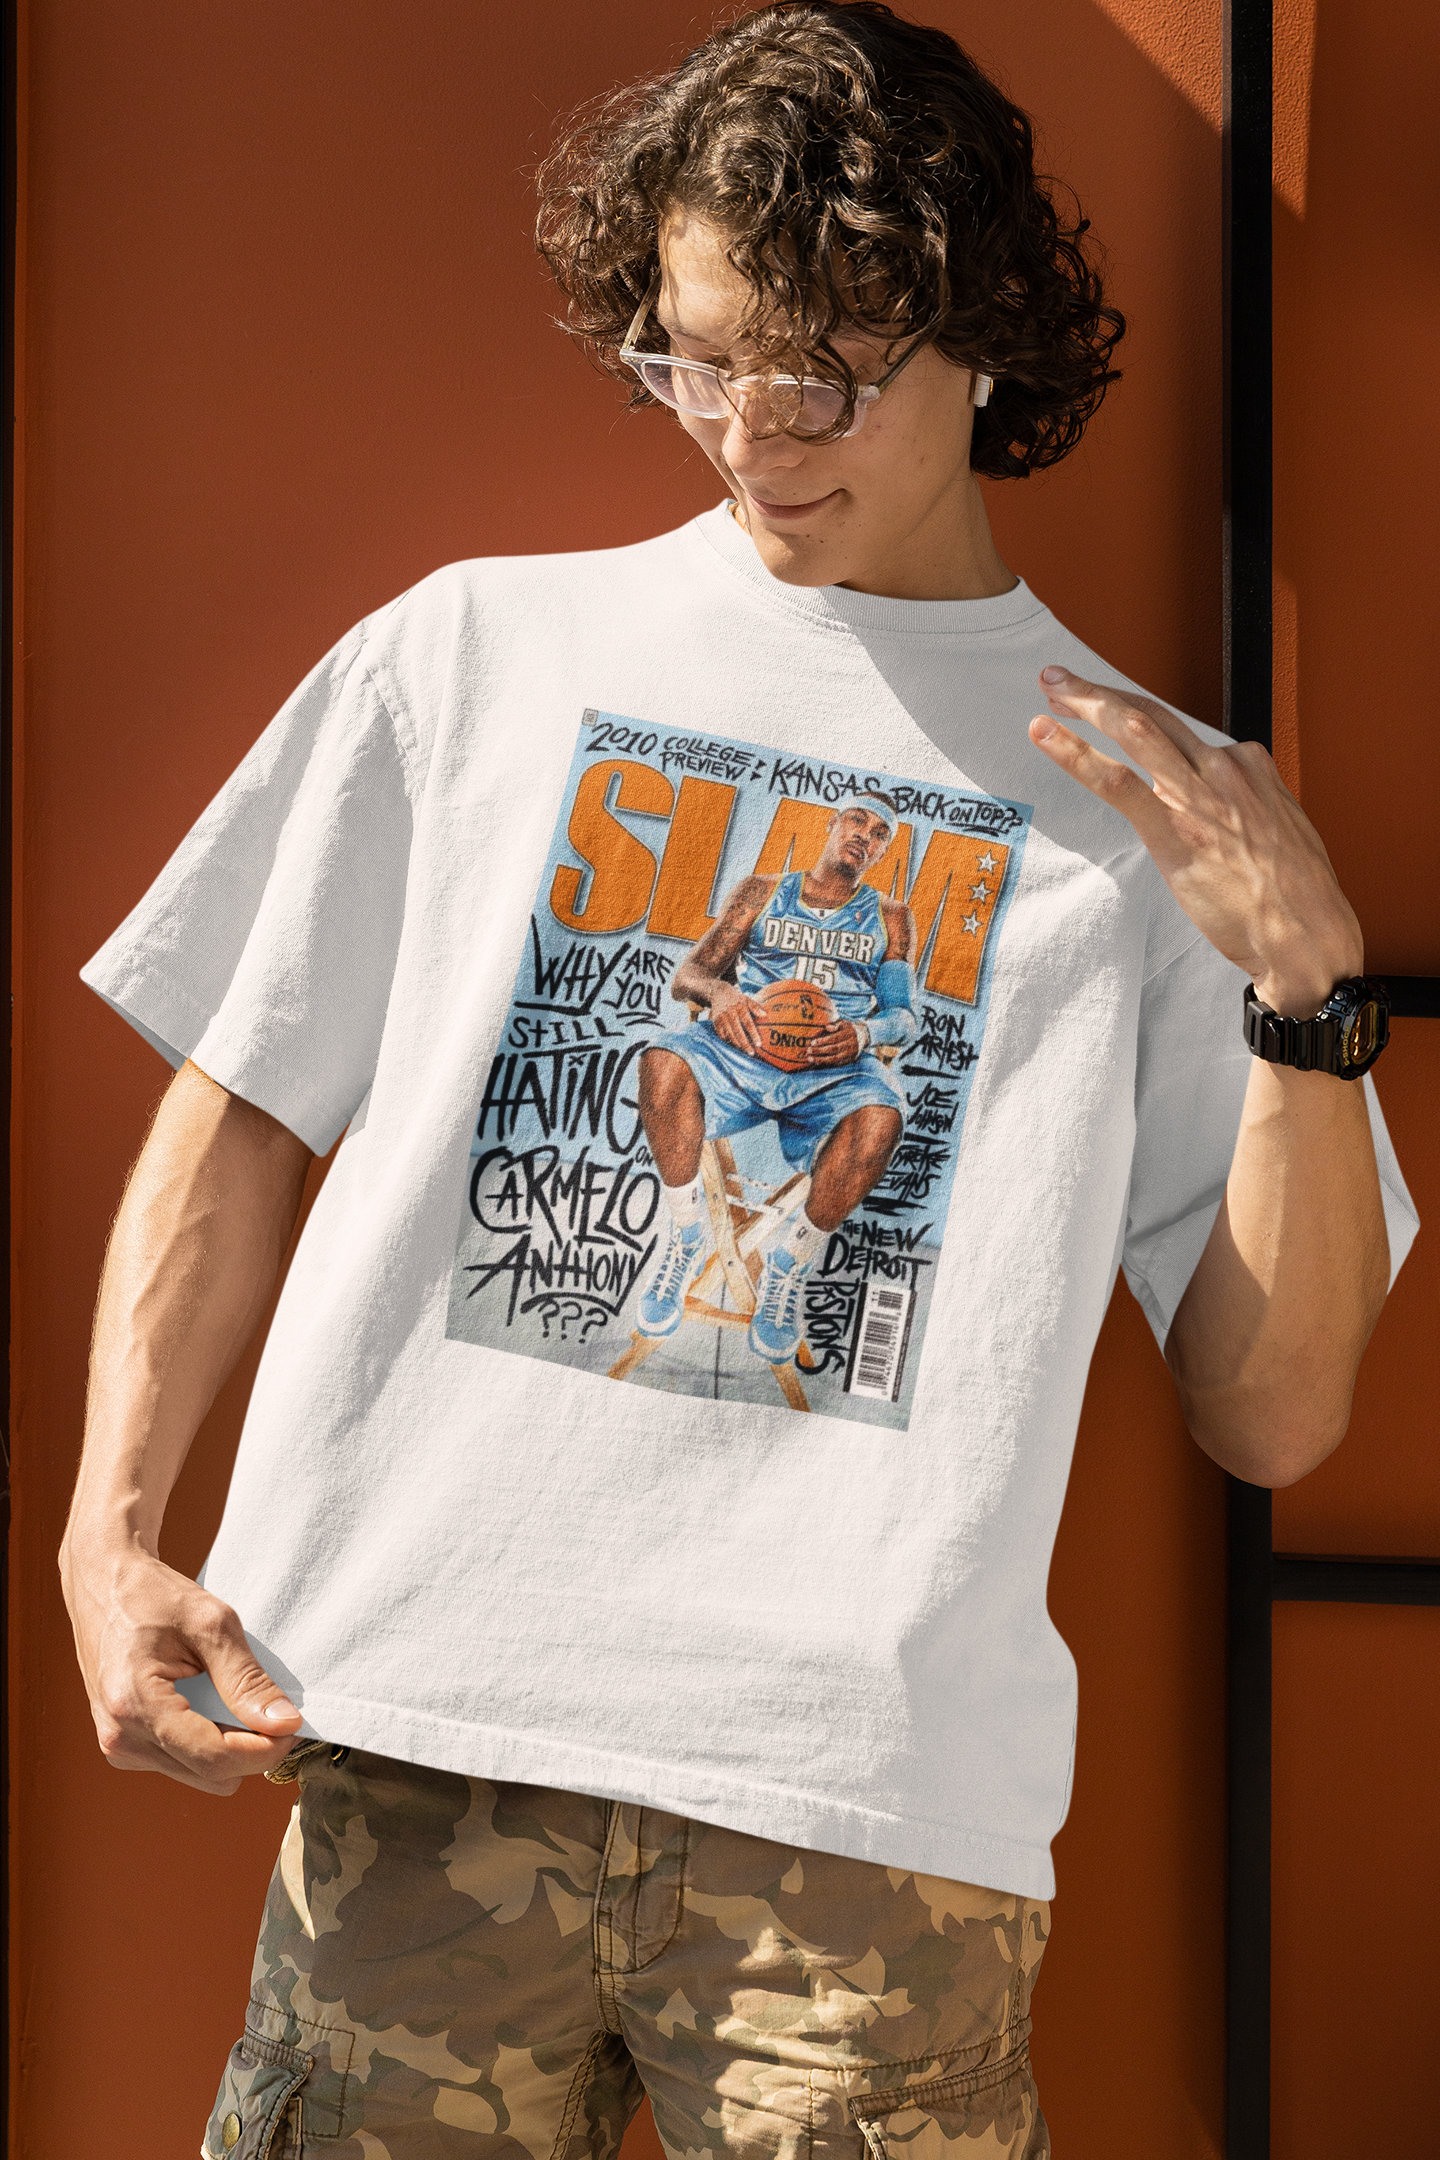 CARMELO ANTHONY 90s Retro Vintage T Shirt New Men Women Size T-Shirt - PH492